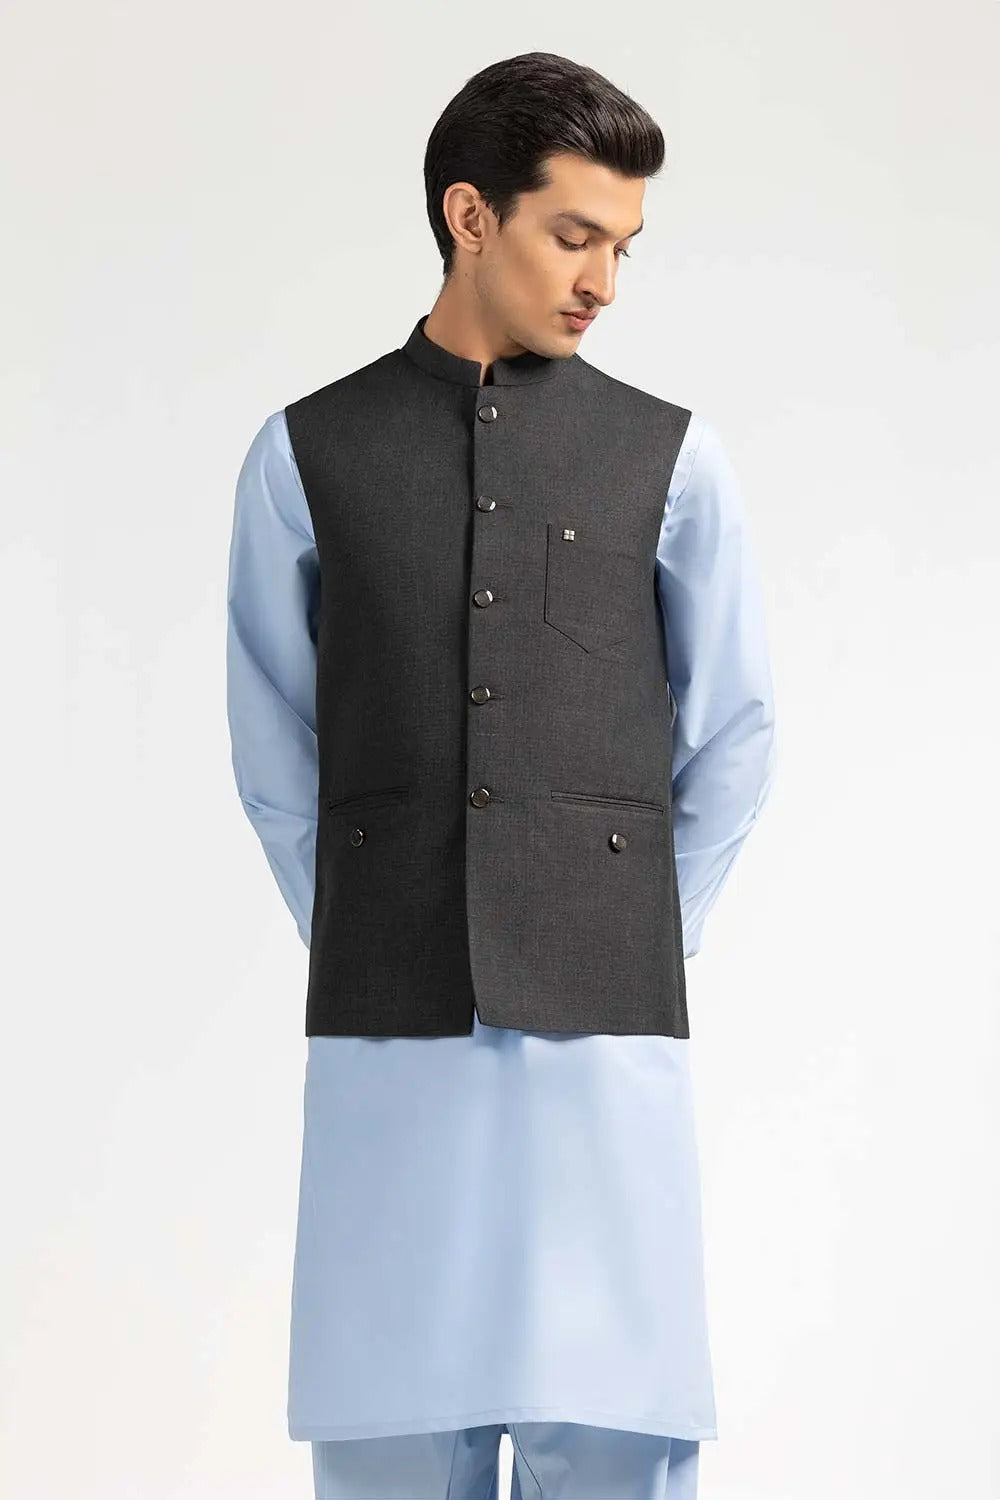 Gul Ahmed Ready to Wear Charcoal Stylized Waistcoat - WC-PD22-011